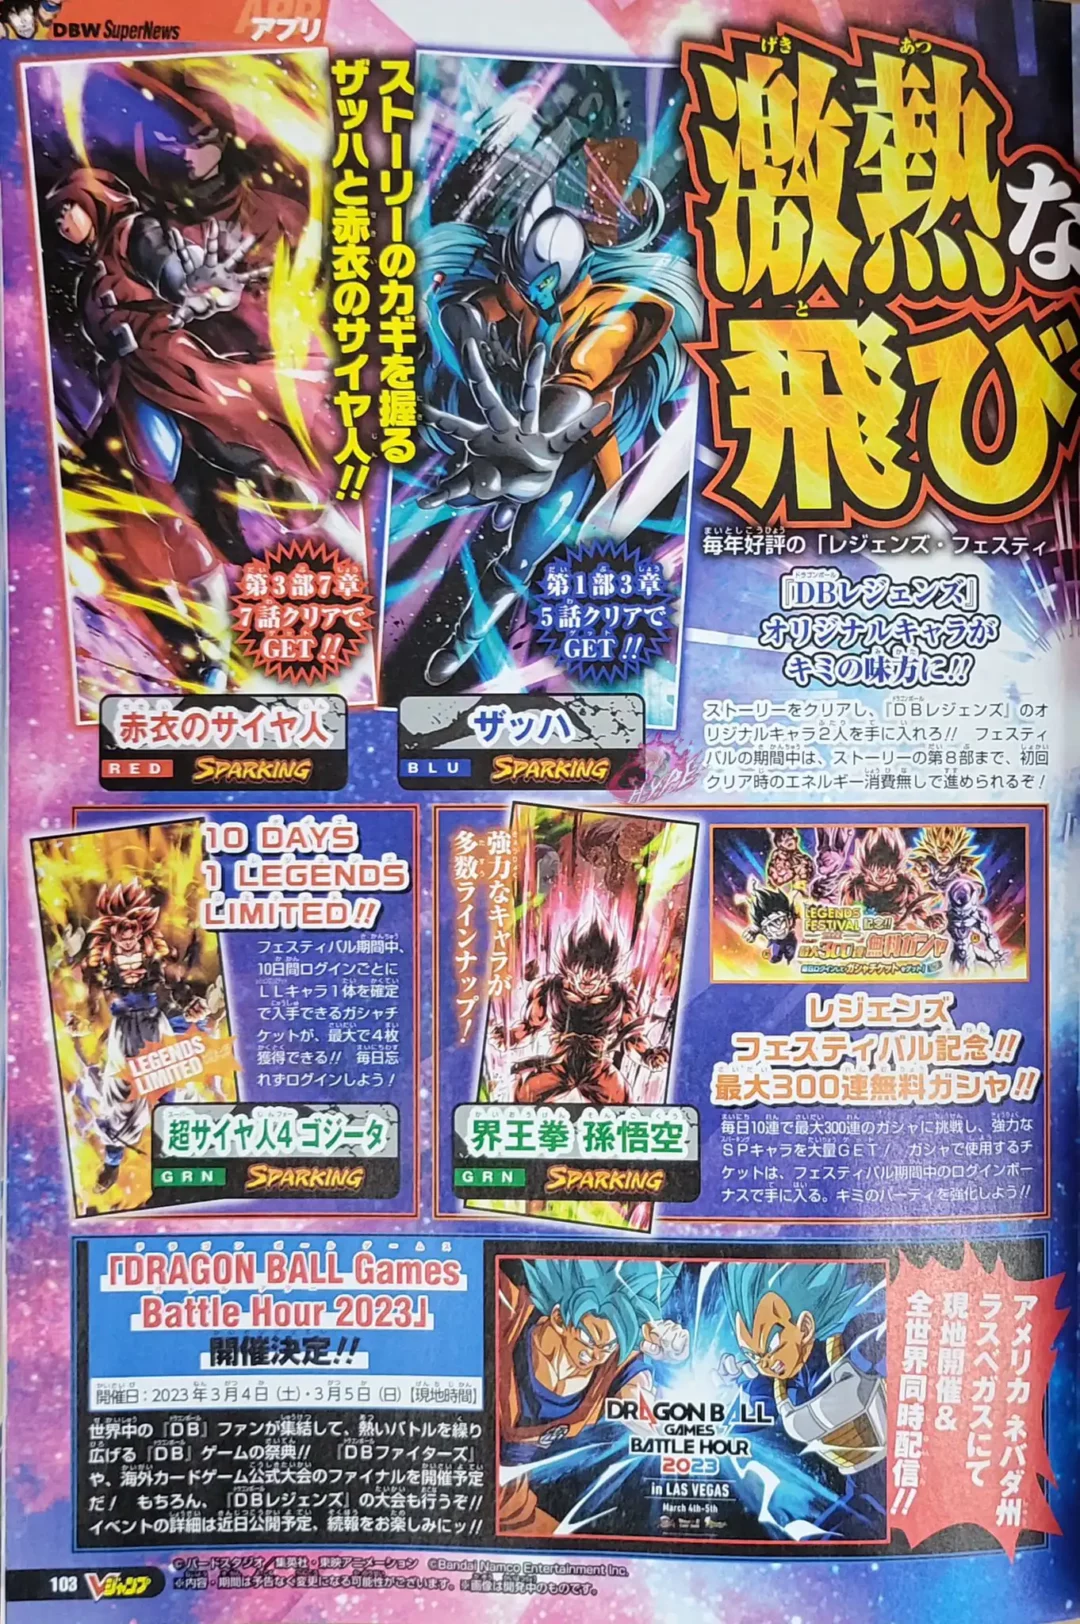 Dragon Ball Legends V Jump 21 Decembre page 1 copie